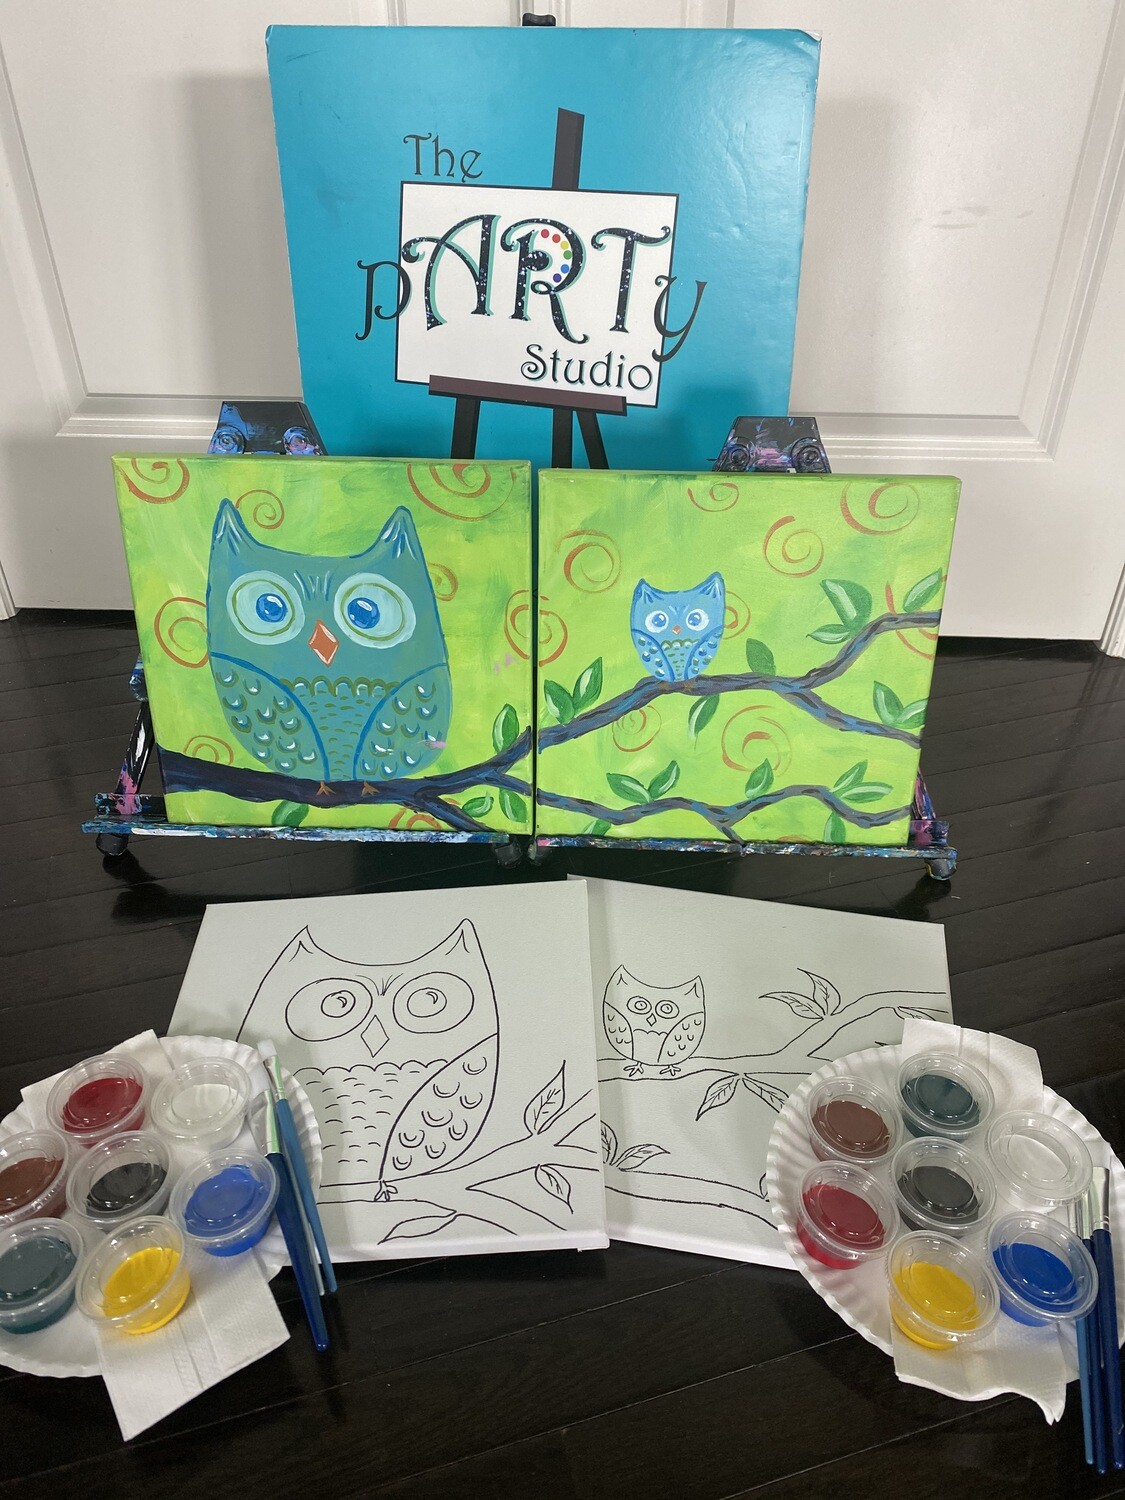 Mama & Baby Owl - At Home Art Kits 
2 - 12x12 Canvases